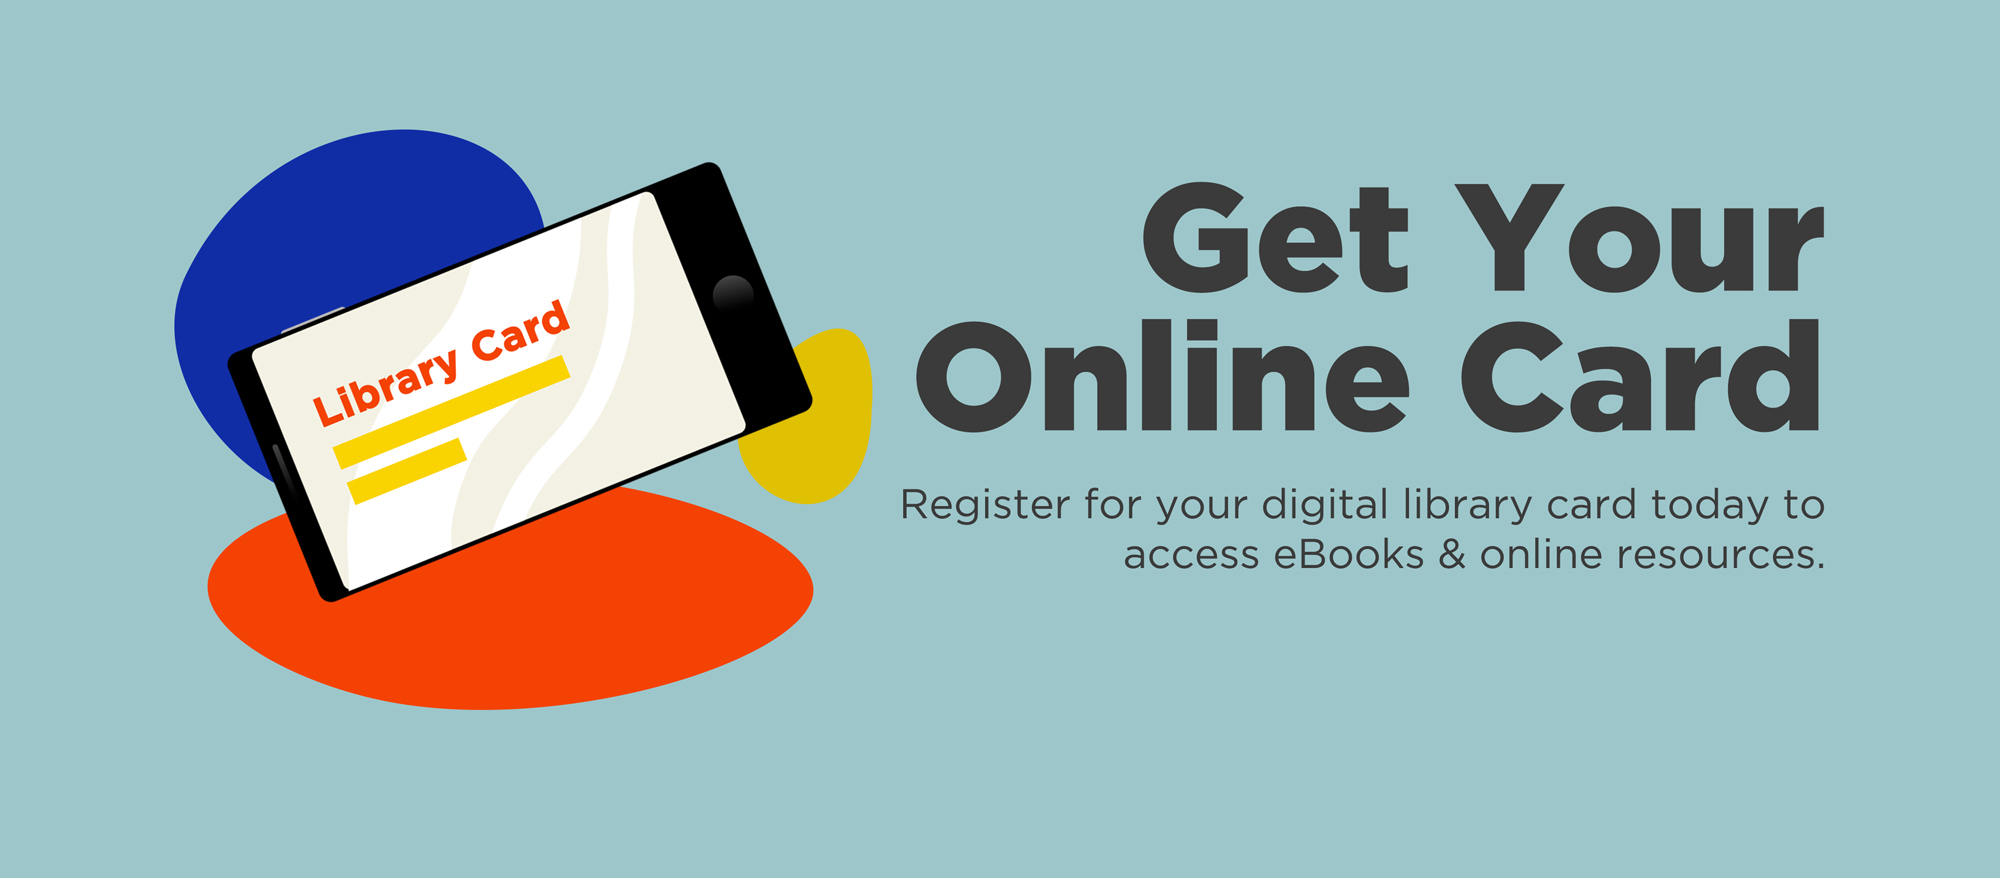 Online Library Card Registration